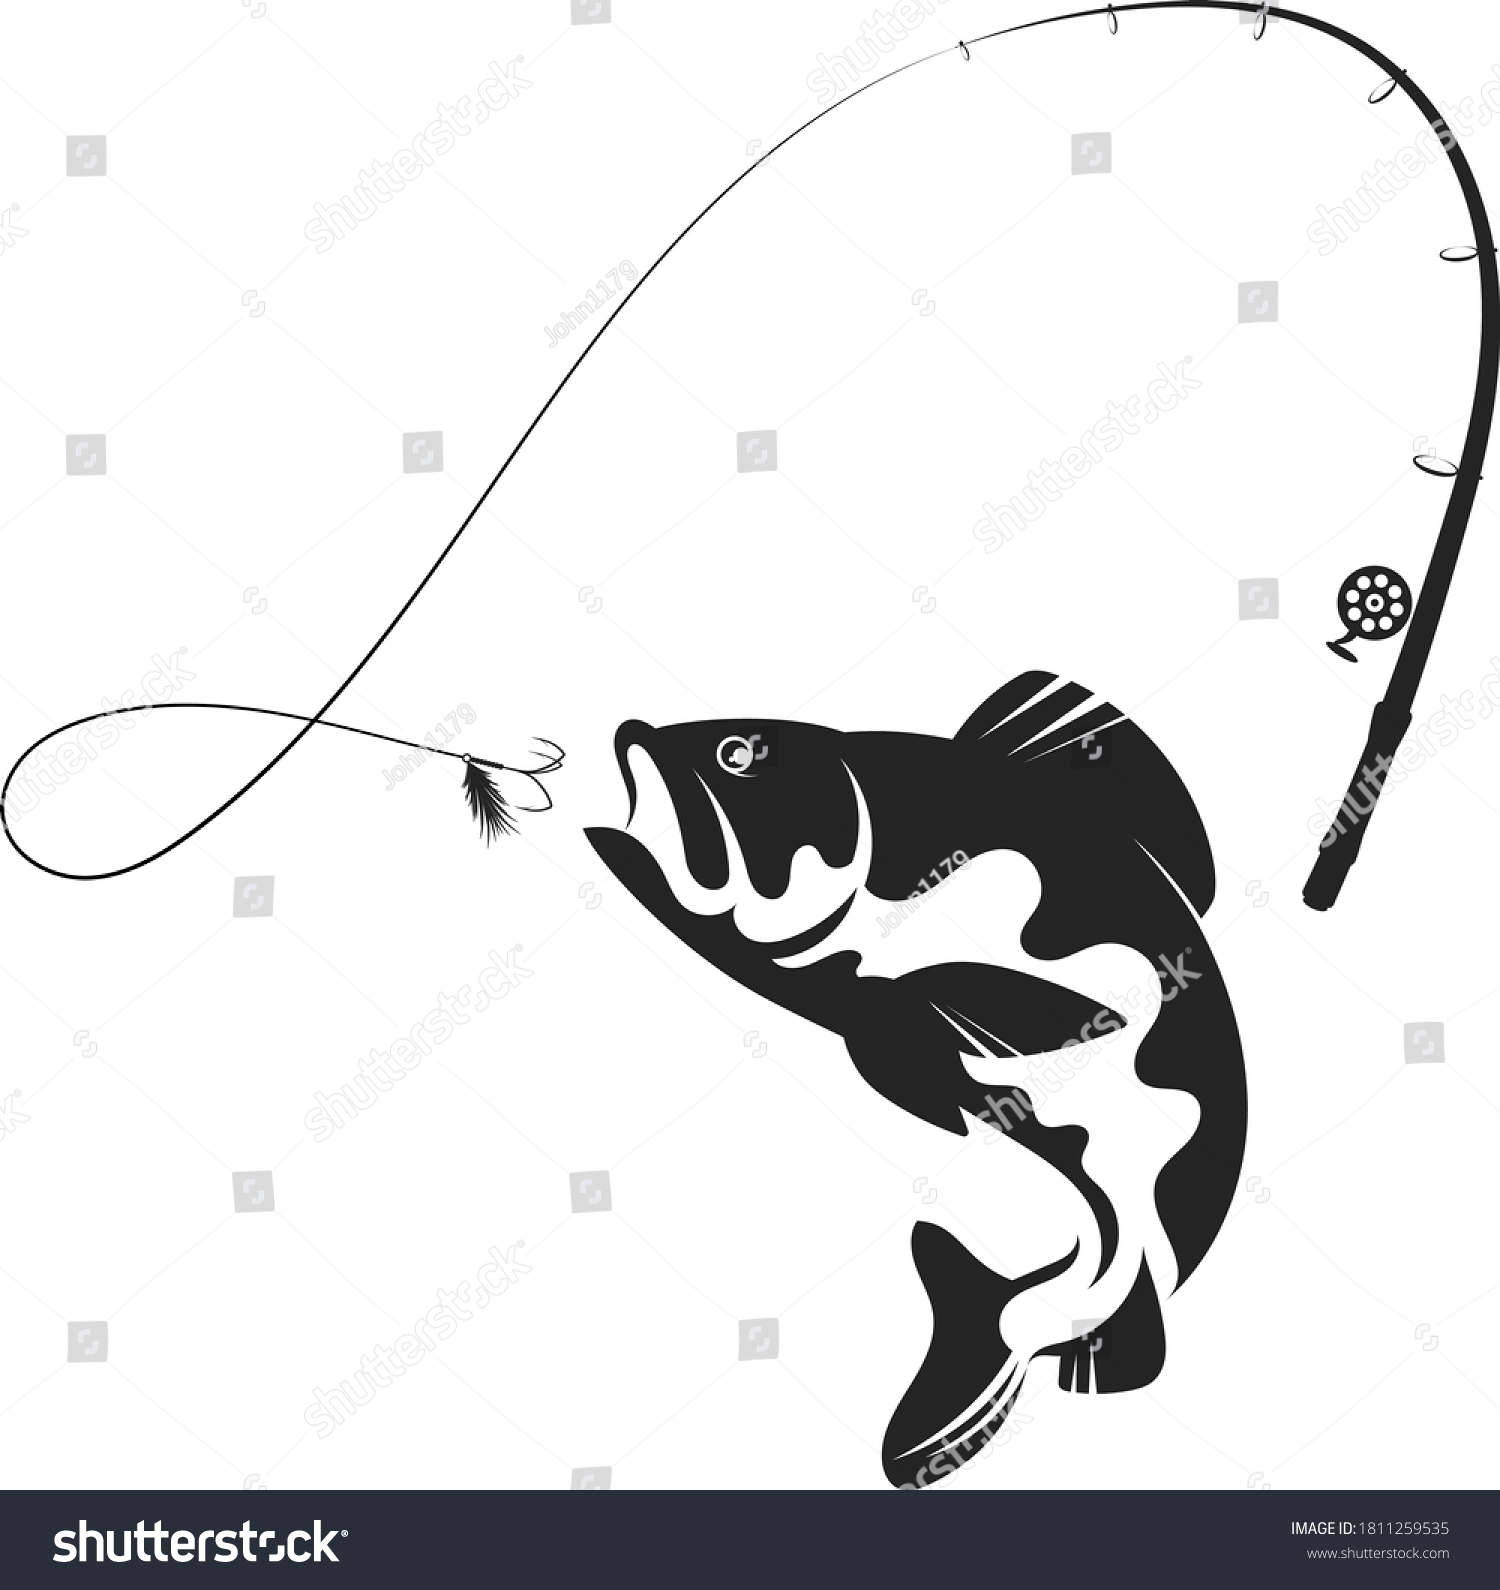 Fishing rod sketch Images, Stock Photos & Vectors | Shutterstock